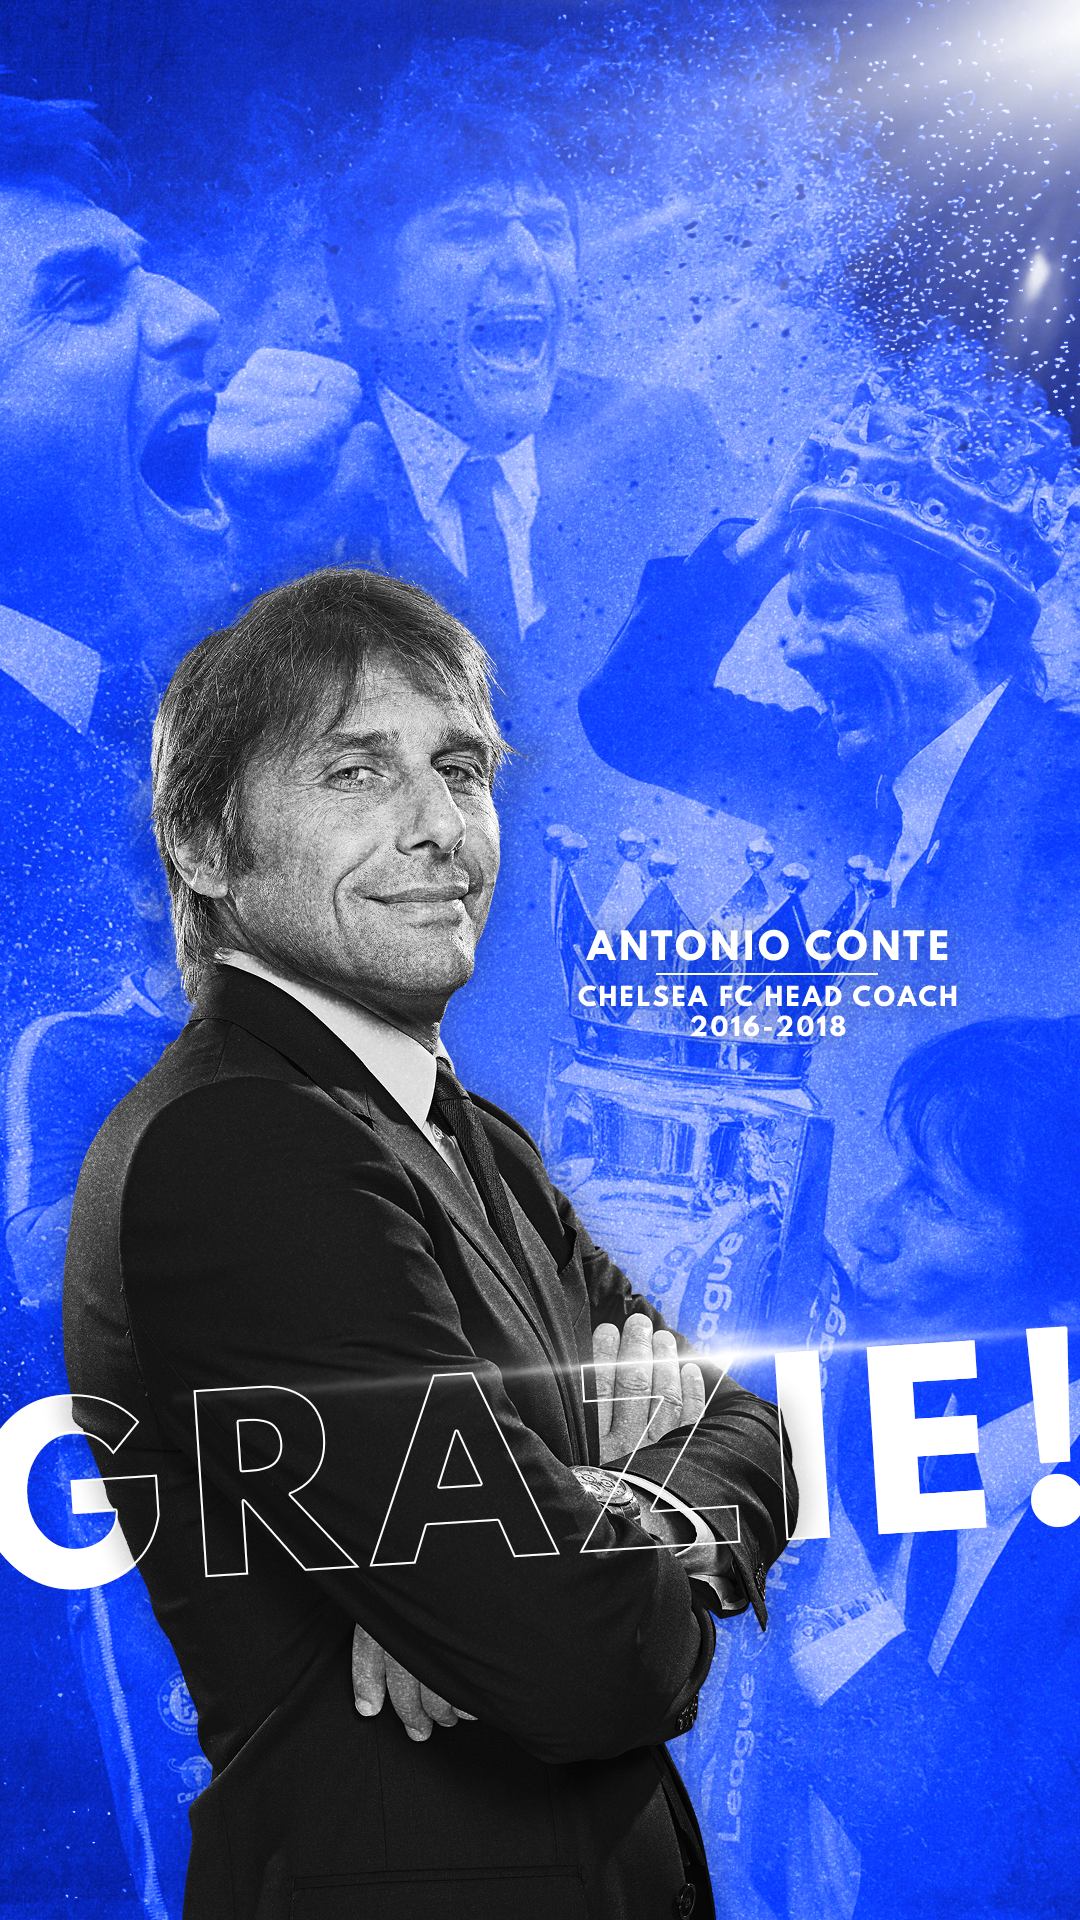 chelsea fc Premier League Chelsea Sports graphic football Antonio Conte